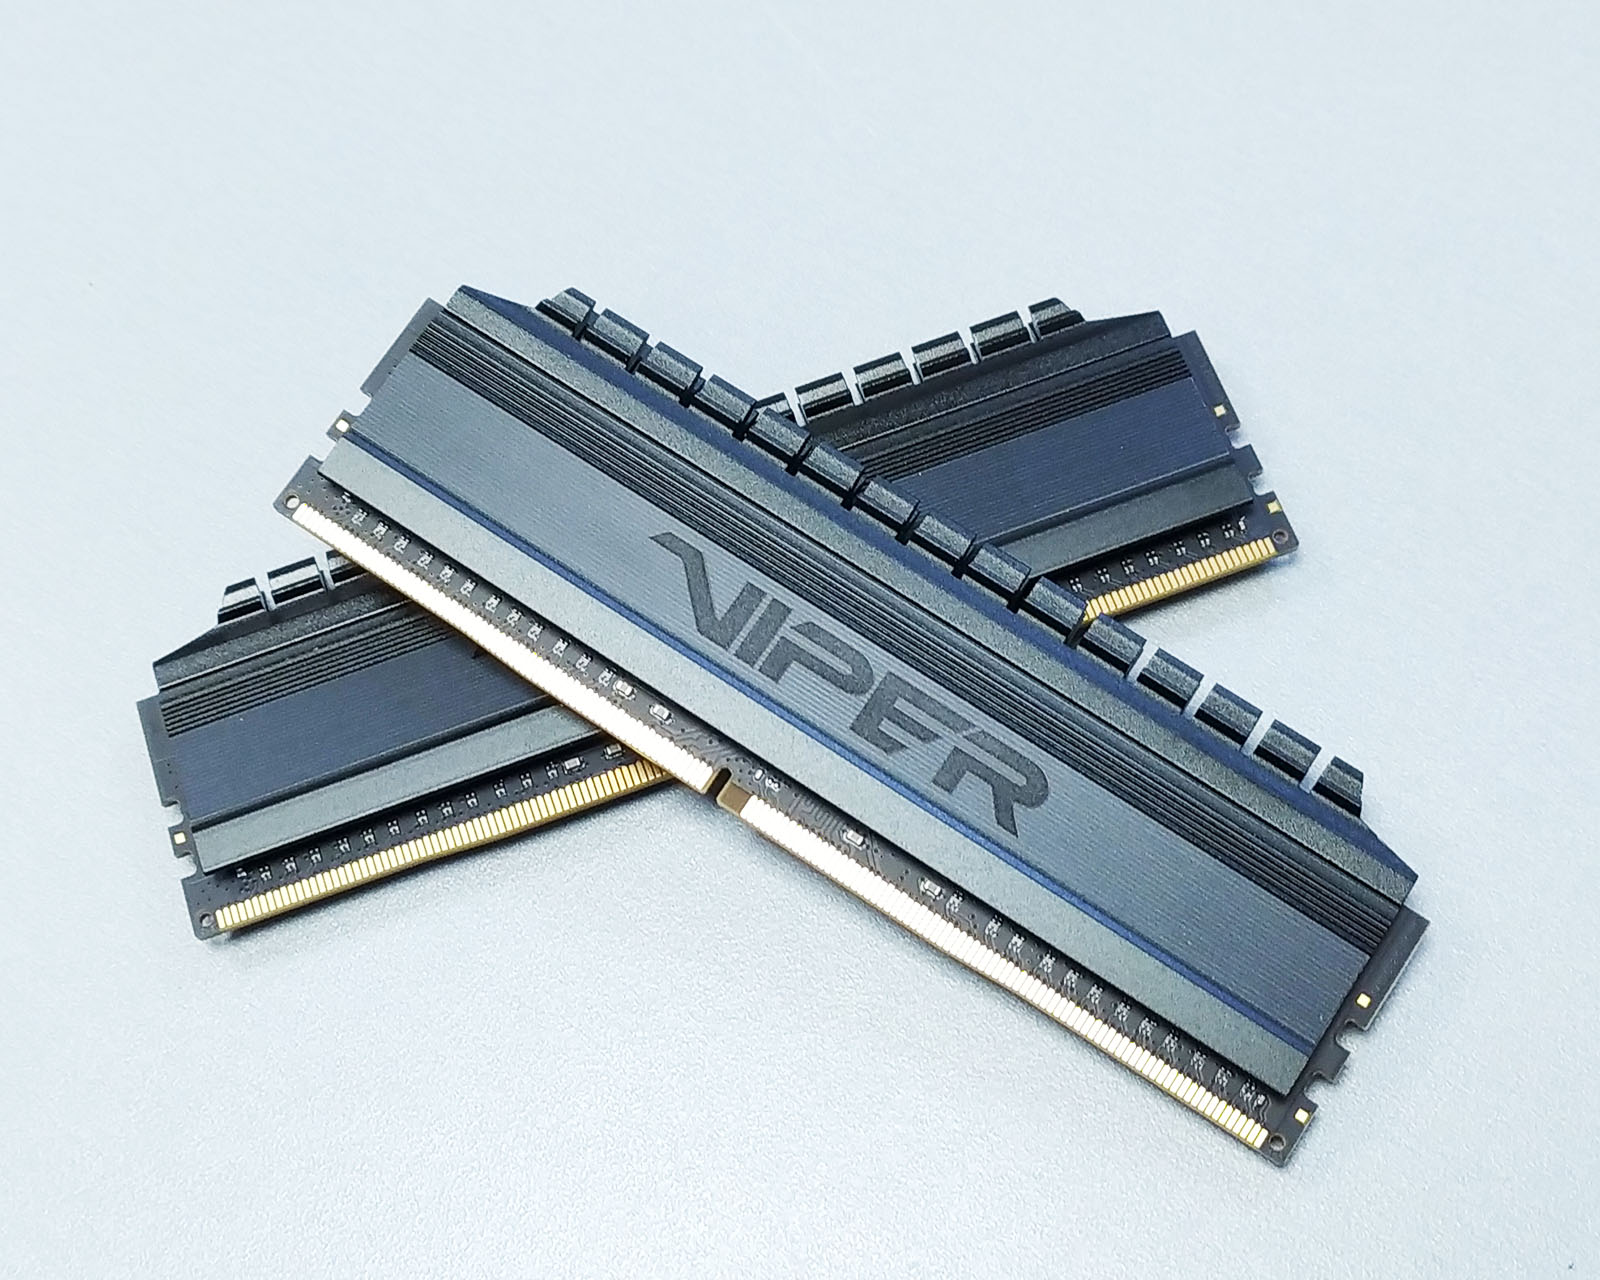 Patriot Viper 4 Blackout 128GB DDR4-3600 Memory Kit Review